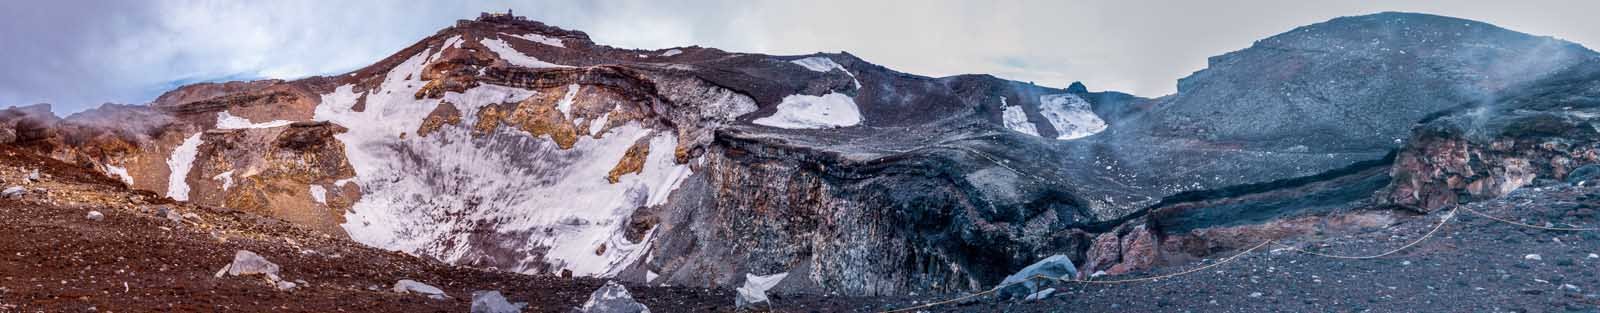 moun fuji summit crater